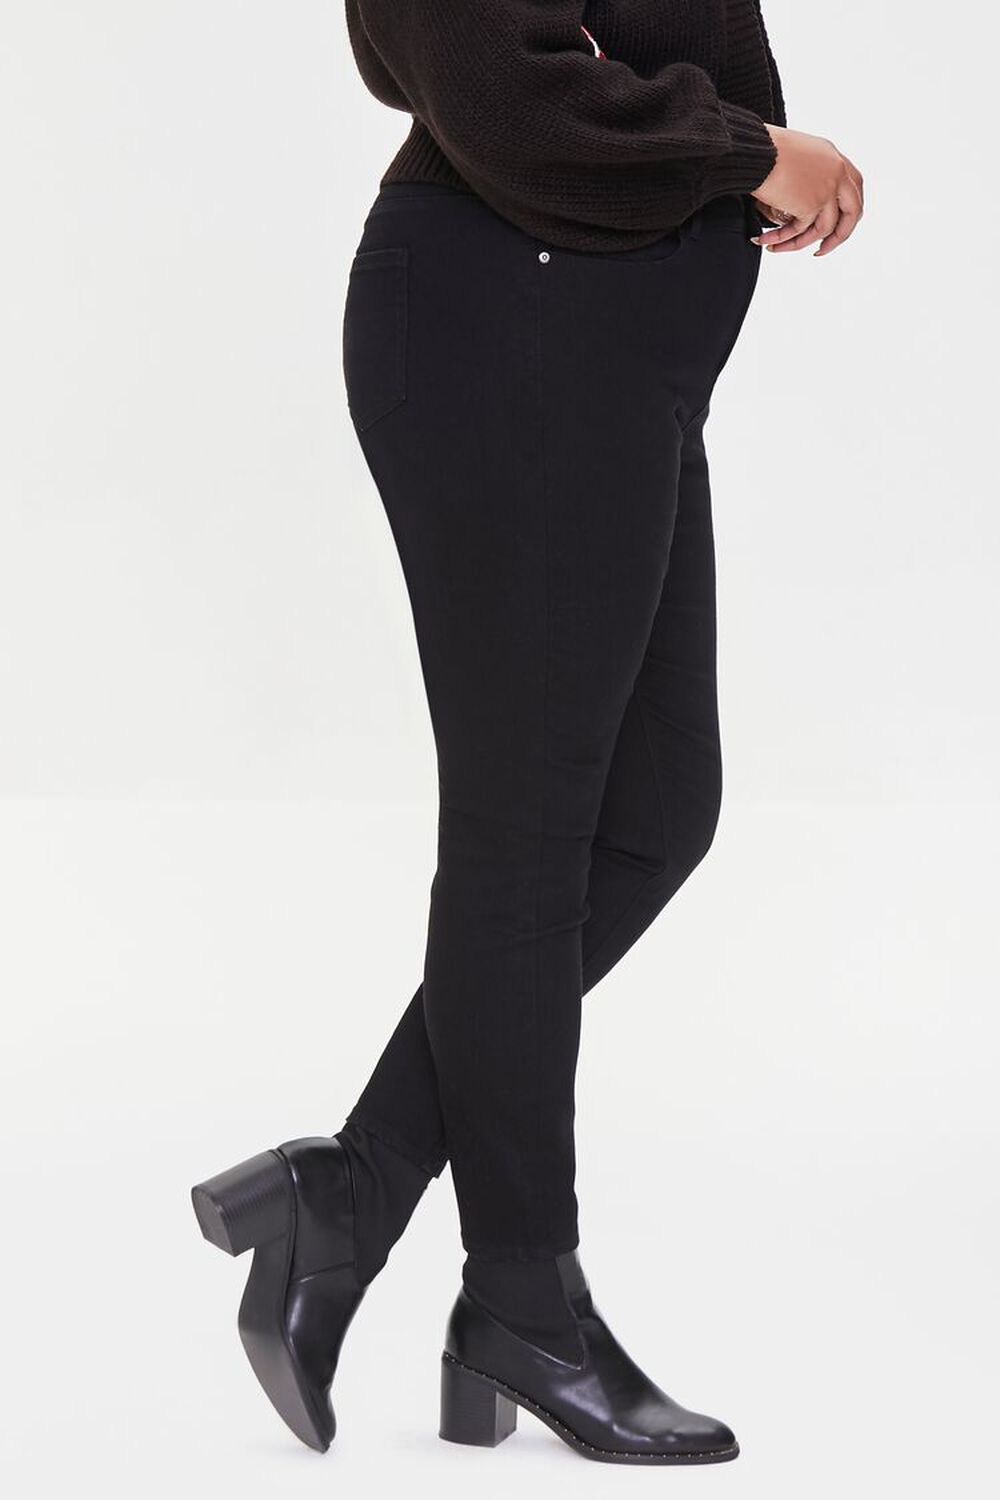 BLACK Plus Size Basic Skinny Jeans, image 3